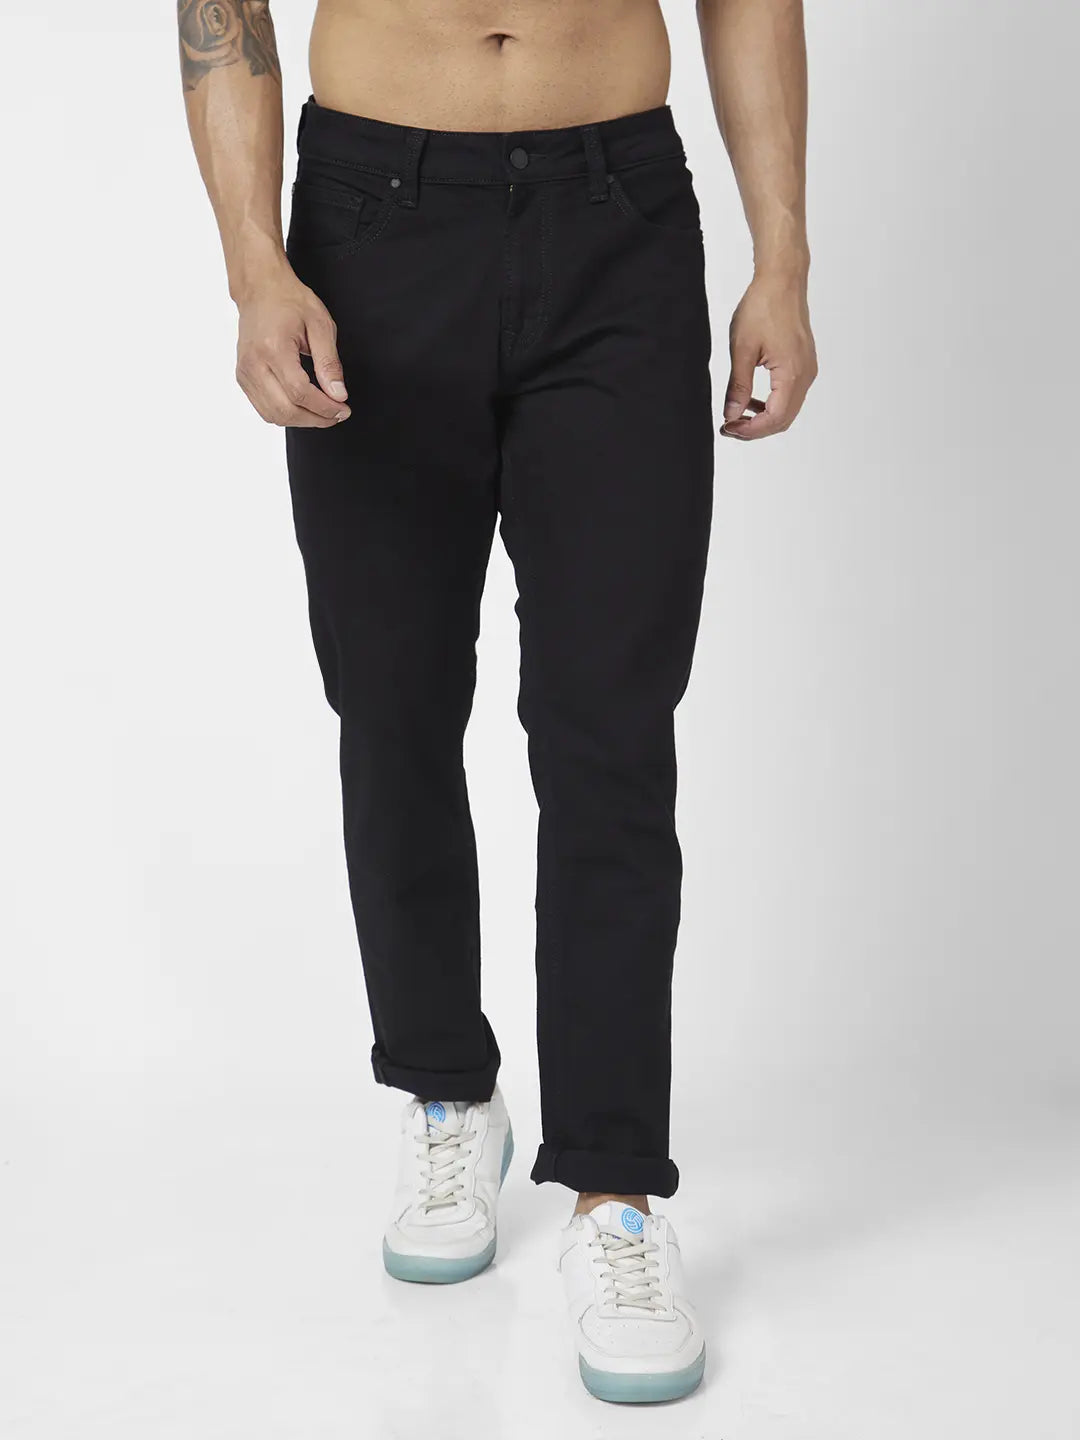 Spykar Men Black Cotton Stretch Slim Fit Narrow Length Clean Look Low Rise Jeans (Skinny)